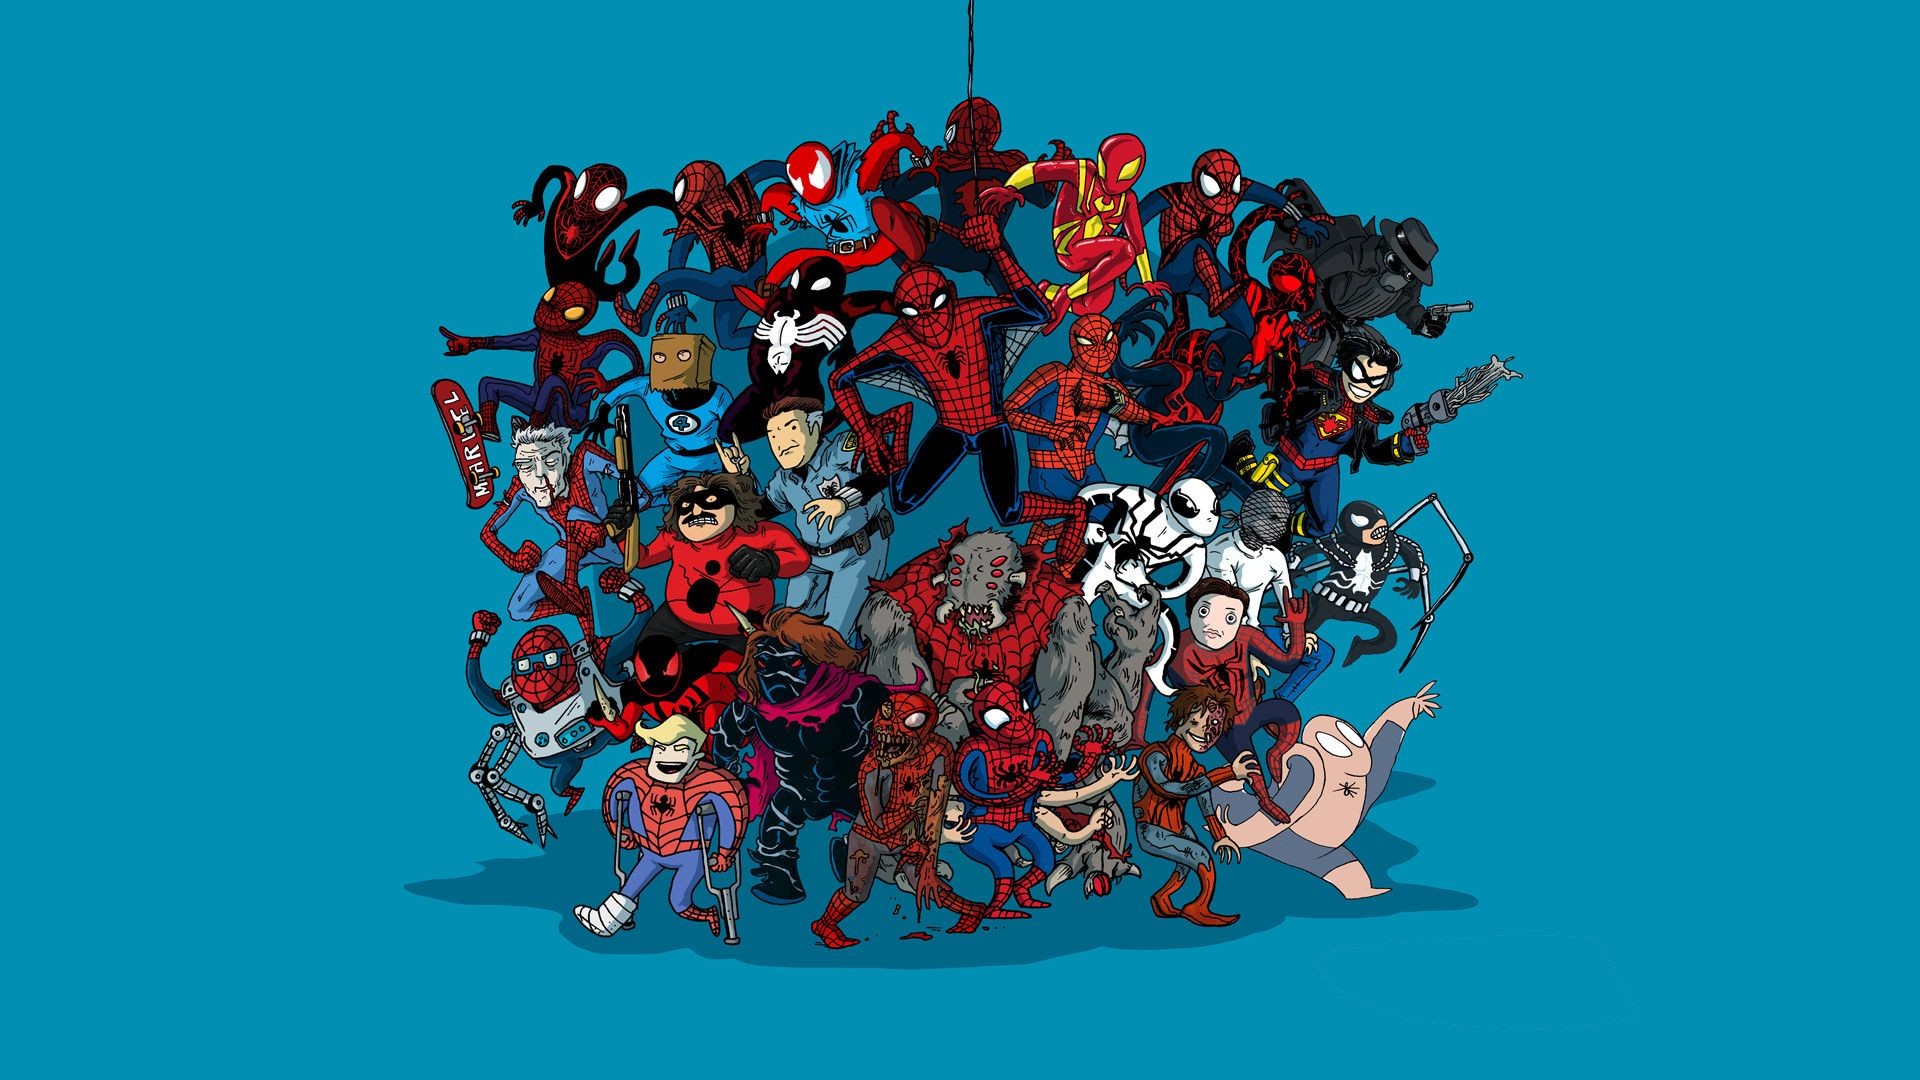 spiderman wallpaper hd free download,fictional character,cartoon,superhero,team,fiction